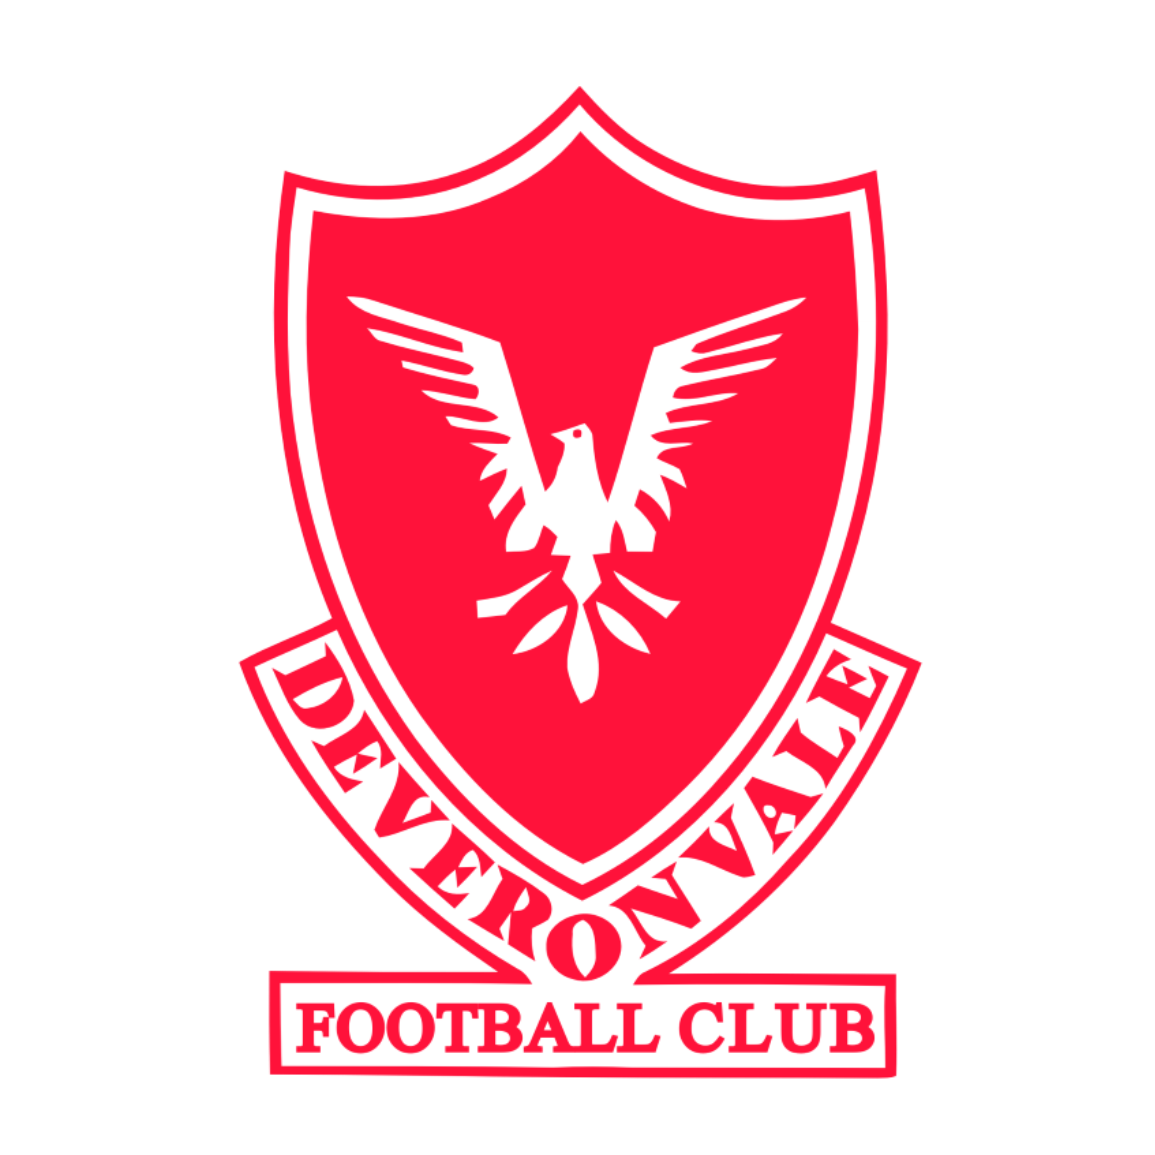 Deveronvale Football Club